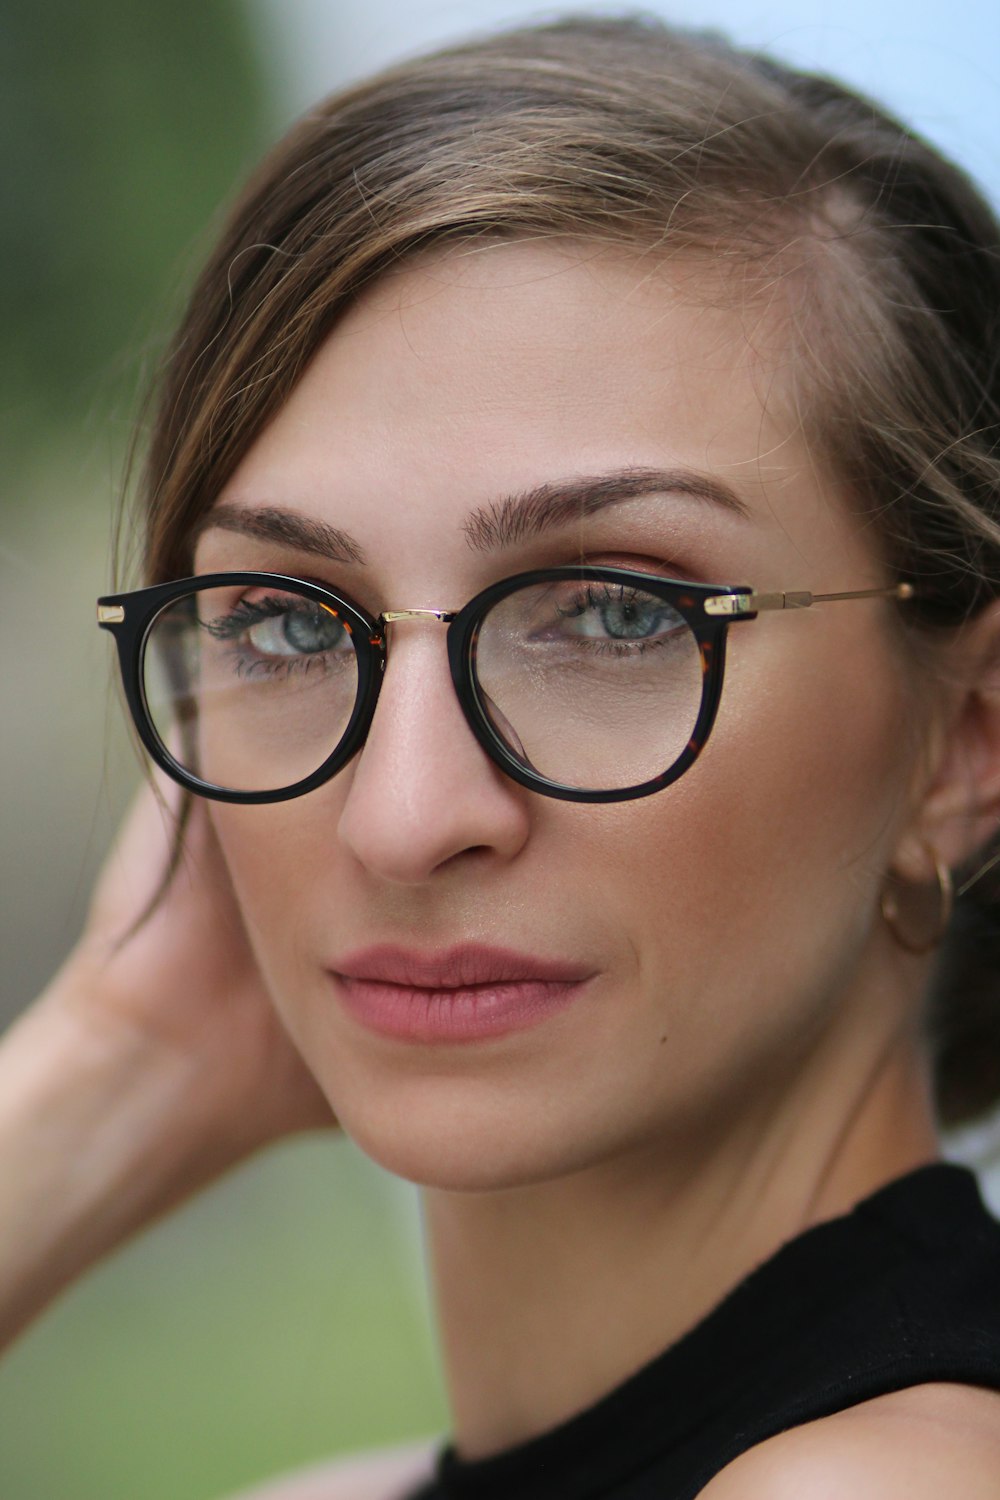 portrait photography of woman wearing eyeglasses